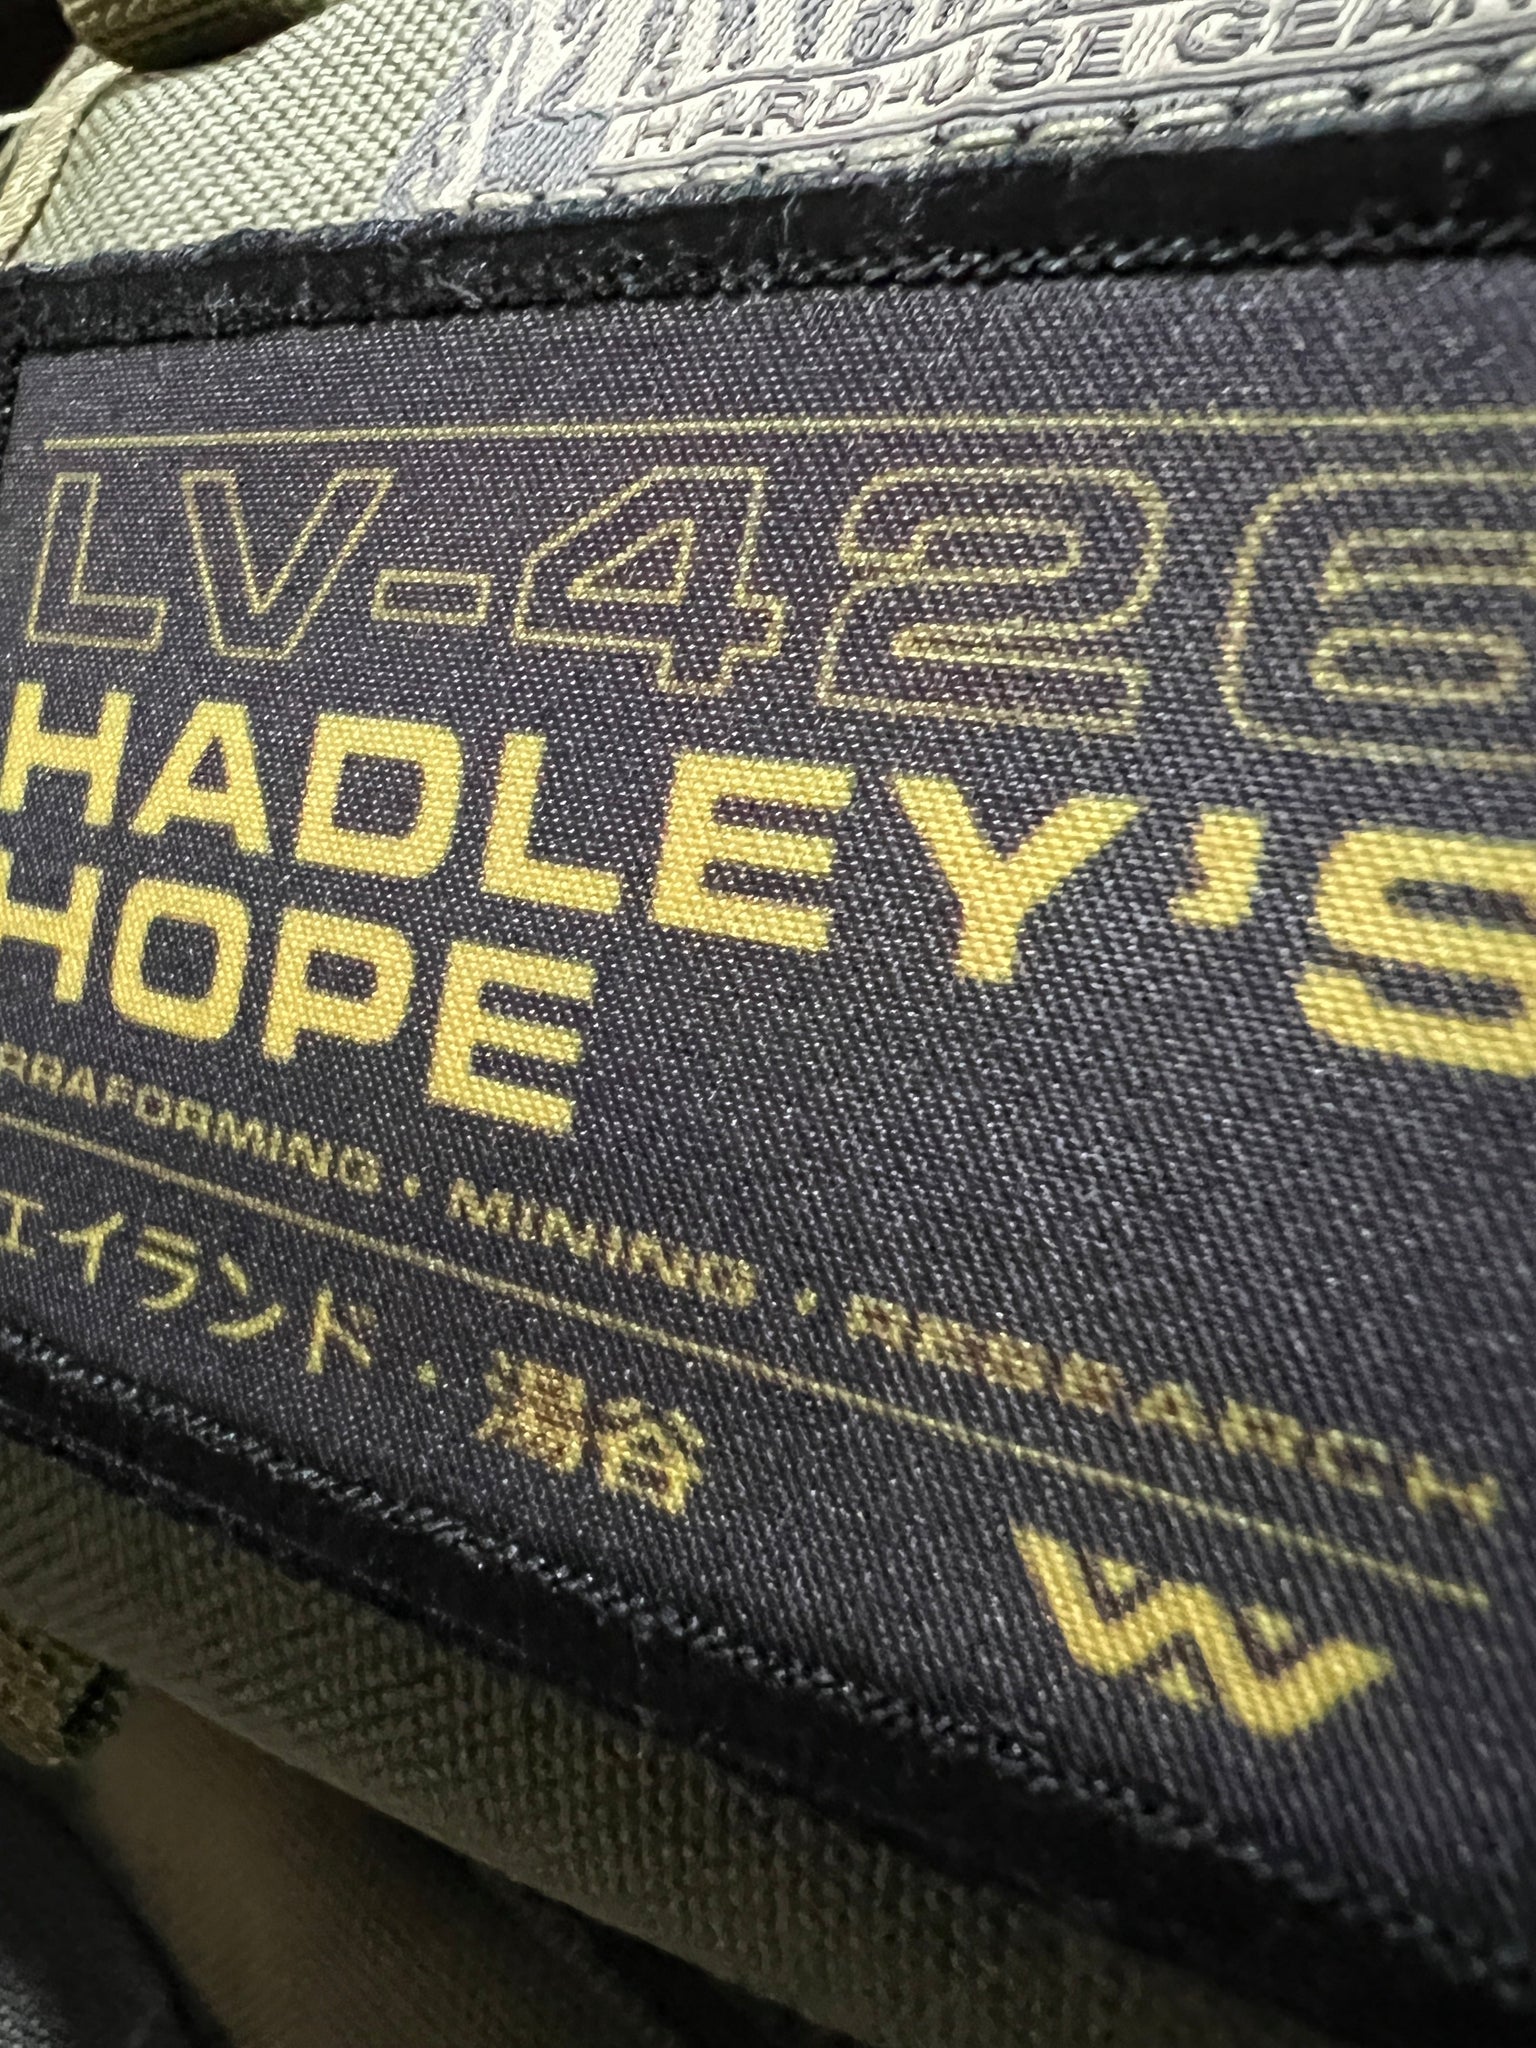 LV-426 Hadley's Hope Weyland Yutani Velcro Morale Patch Morale Patches Redheaded T Shirts 